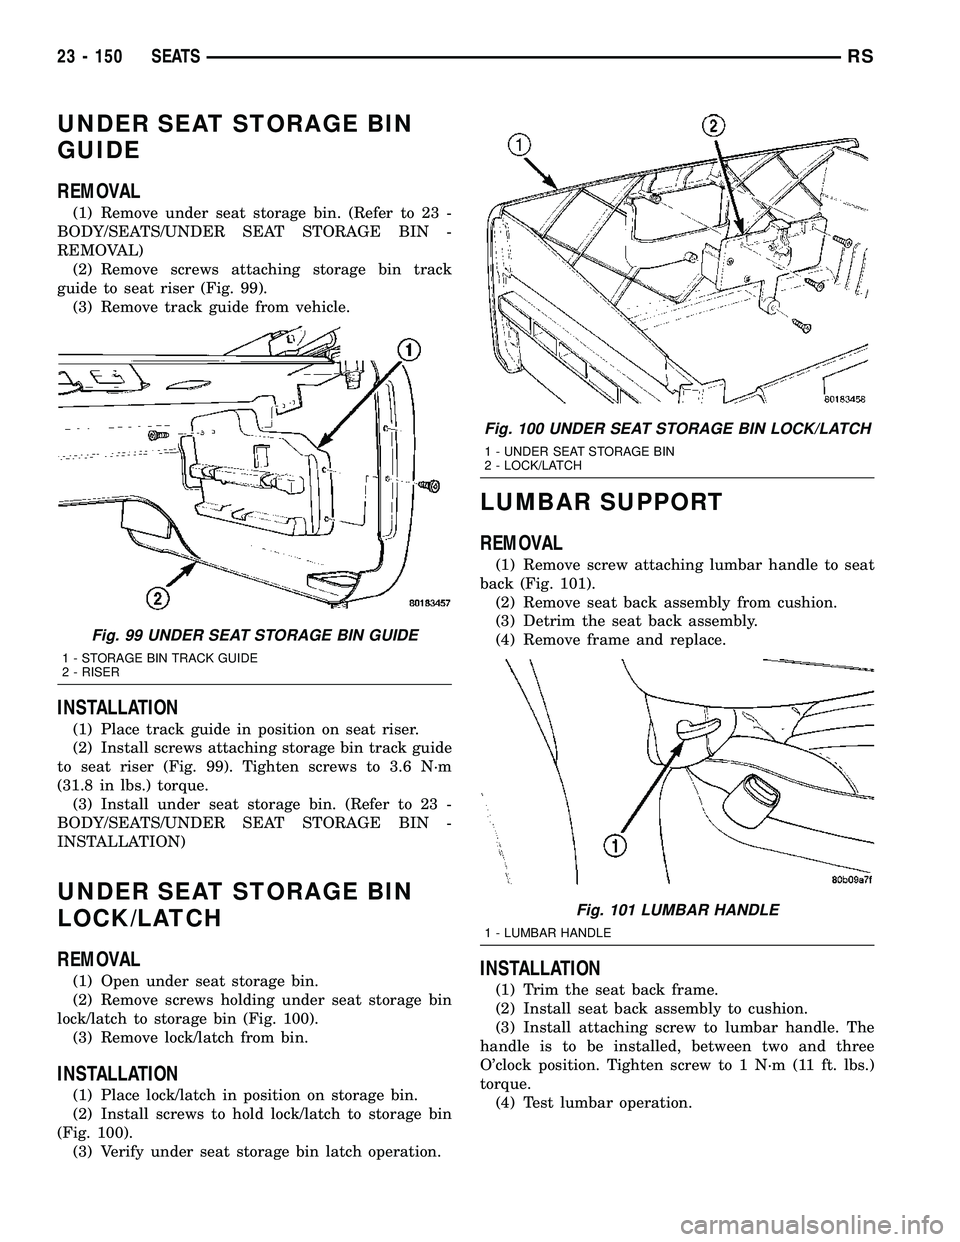 CHRYSLER CARAVAN 2005  Service Manual UNDER SEAT STORAGE BIN
GUIDE
REMOVAL
(1) Remove under seat storage bin. (Refer to 23 -
BODY/SEATS/UNDER SEAT STORAGE BIN -
REMOVAL)
(2) Remove screws attaching storage bin track
guide to seat riser (F